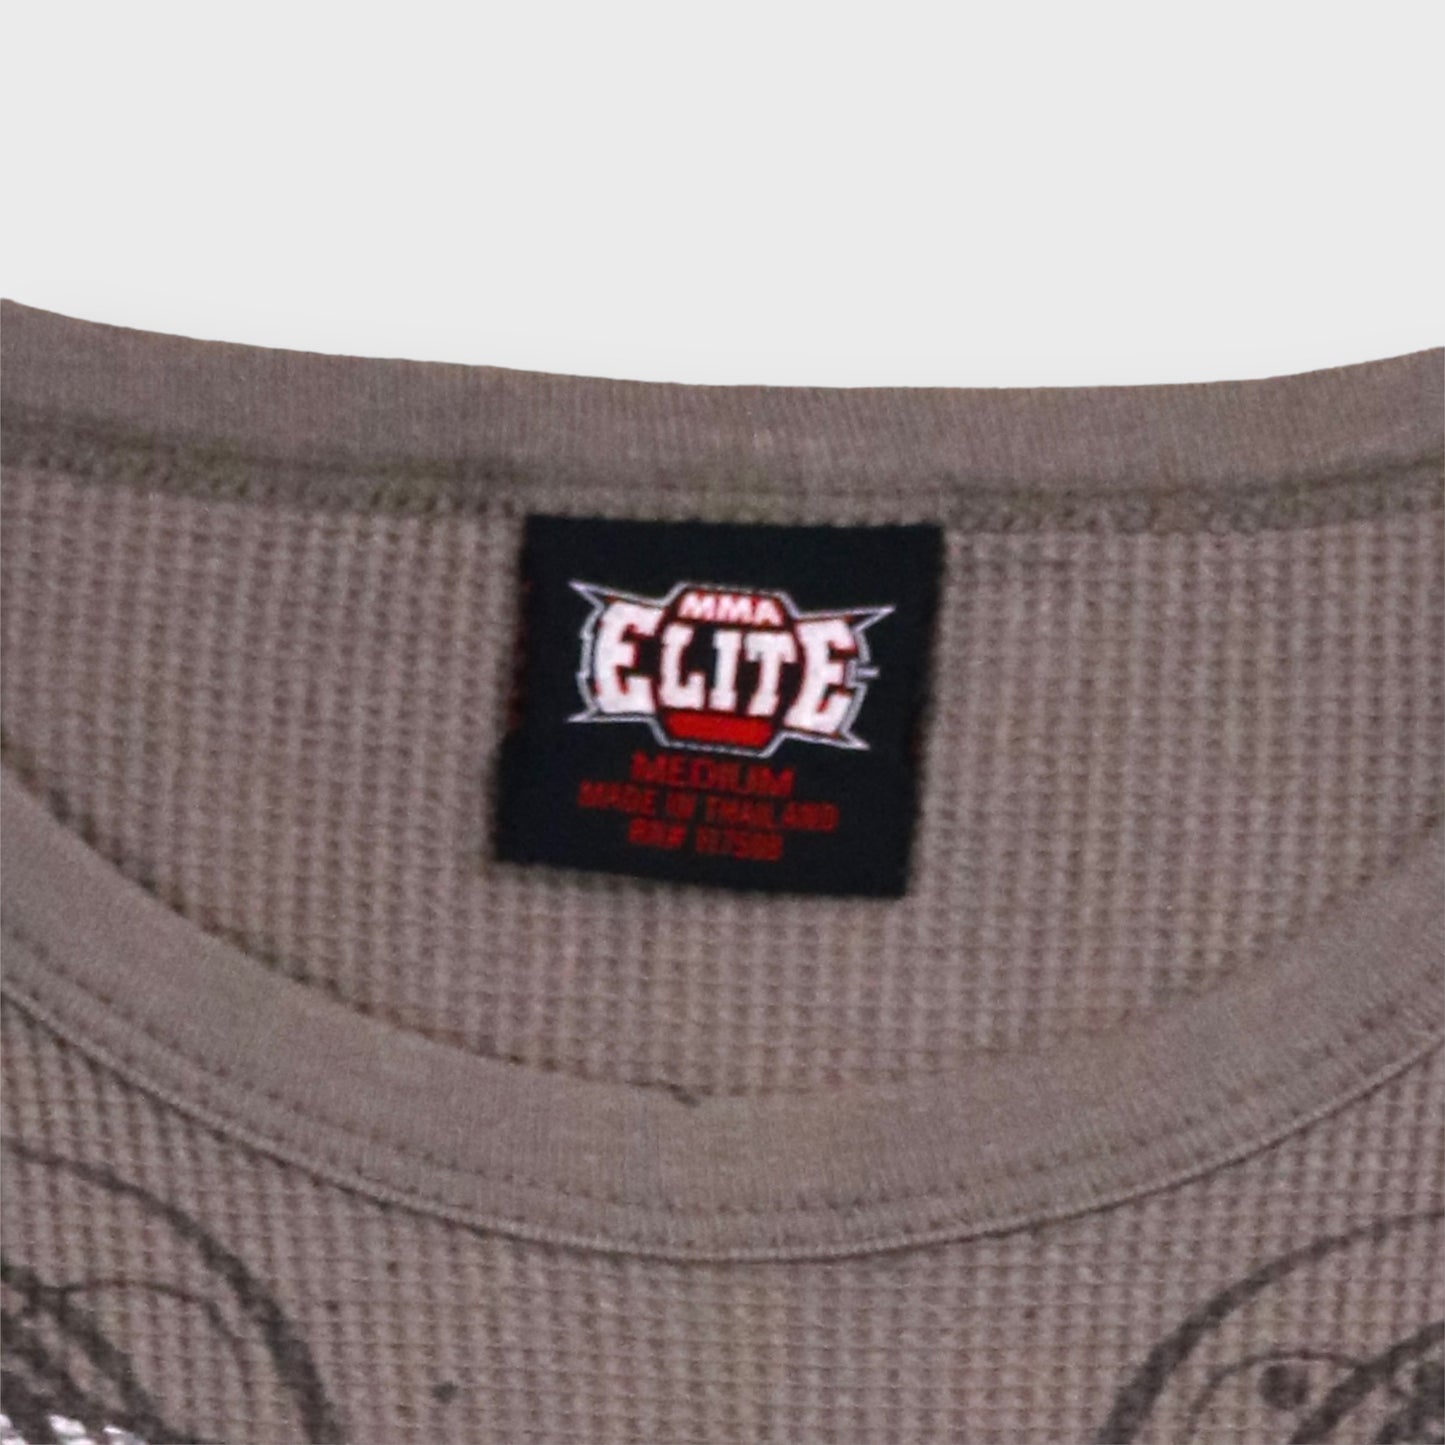 "MMA ELITE" Skull design thermal knit